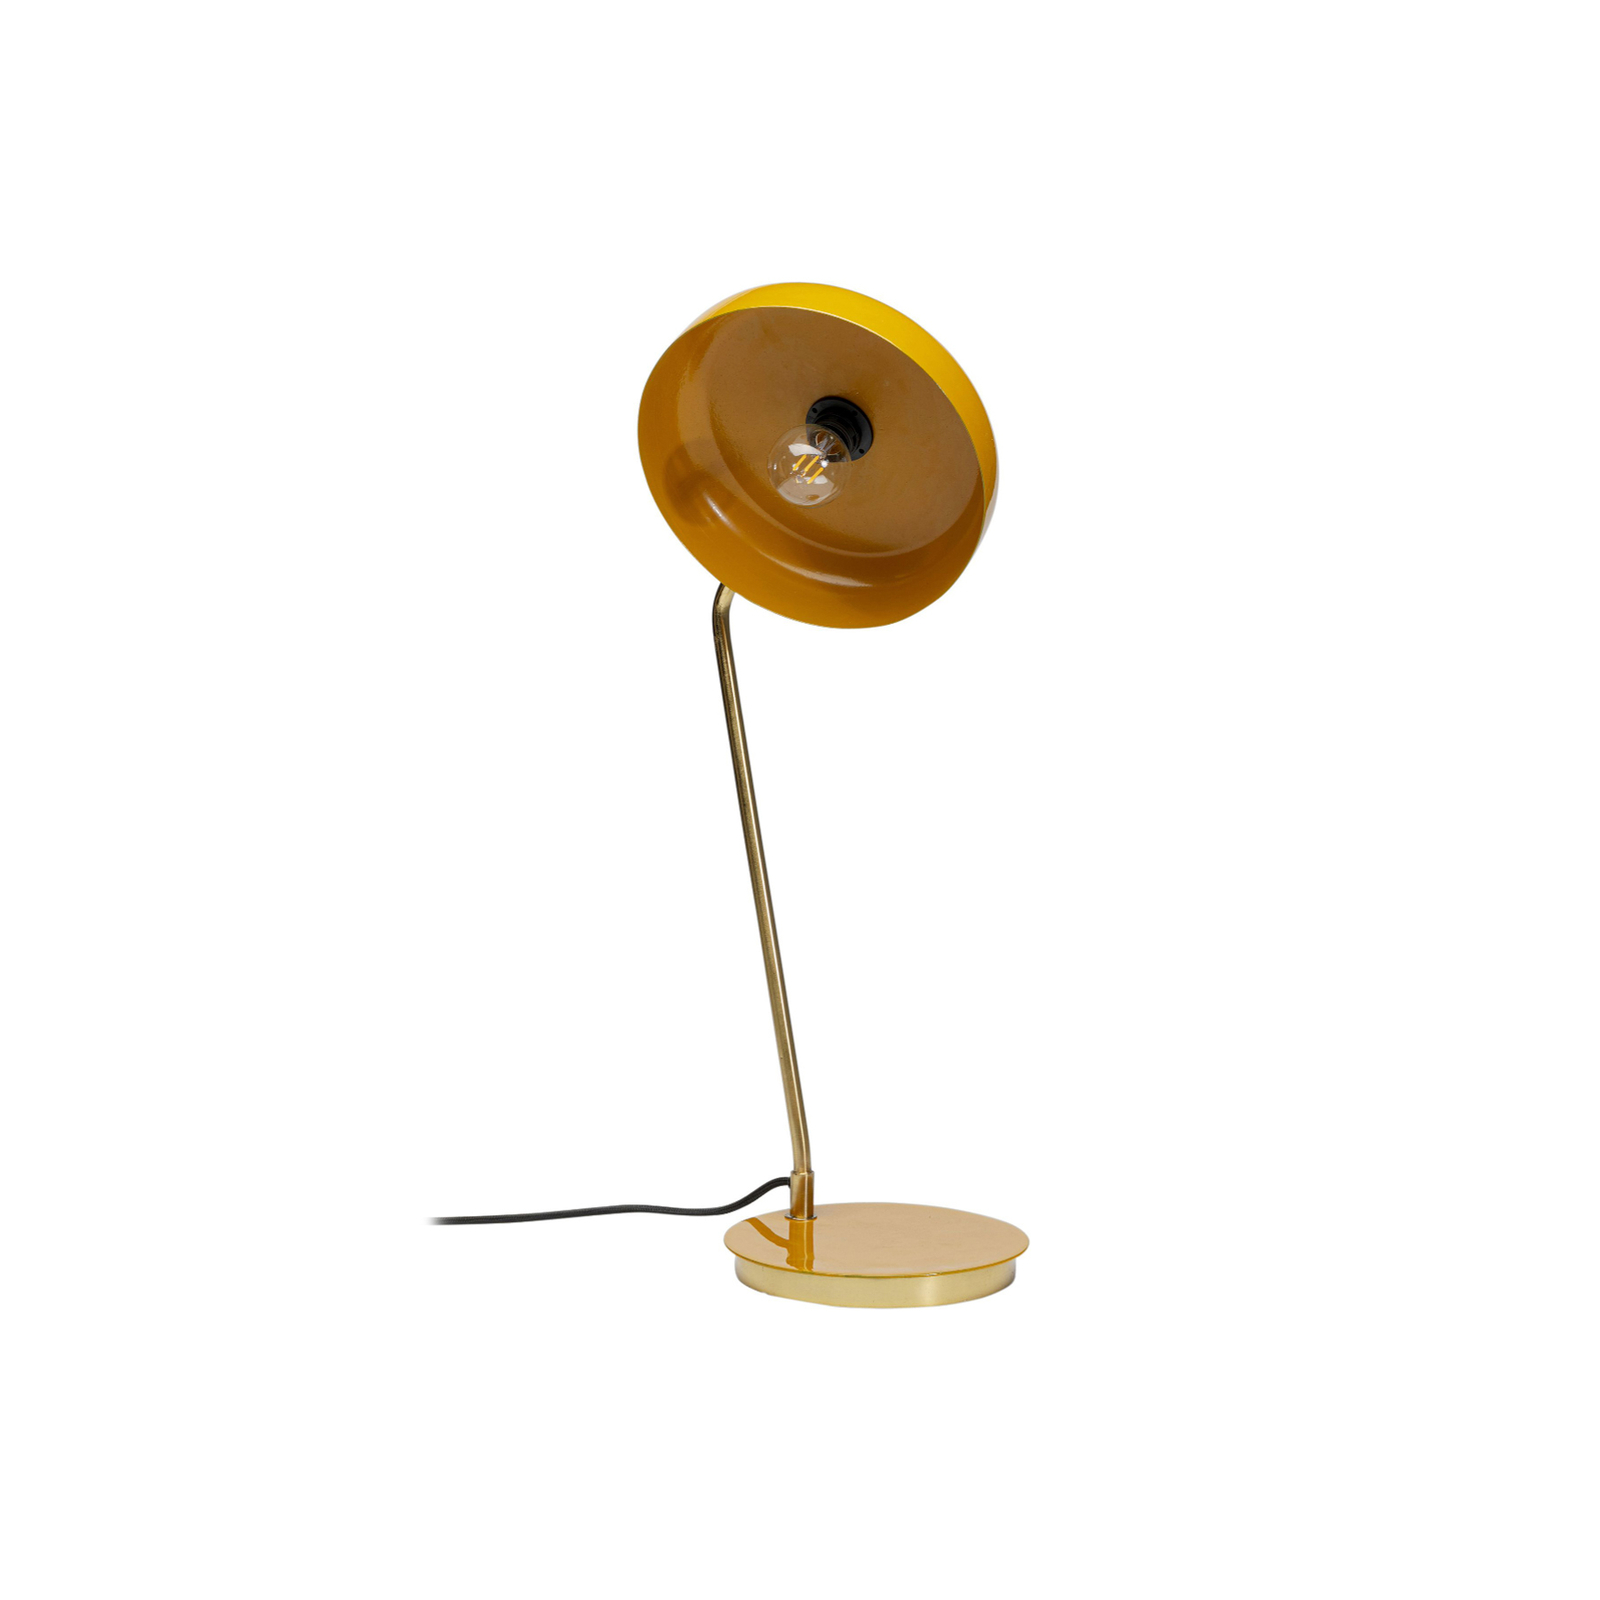 KARE Demi bordlampe, gul, stål, høyde 56 cm